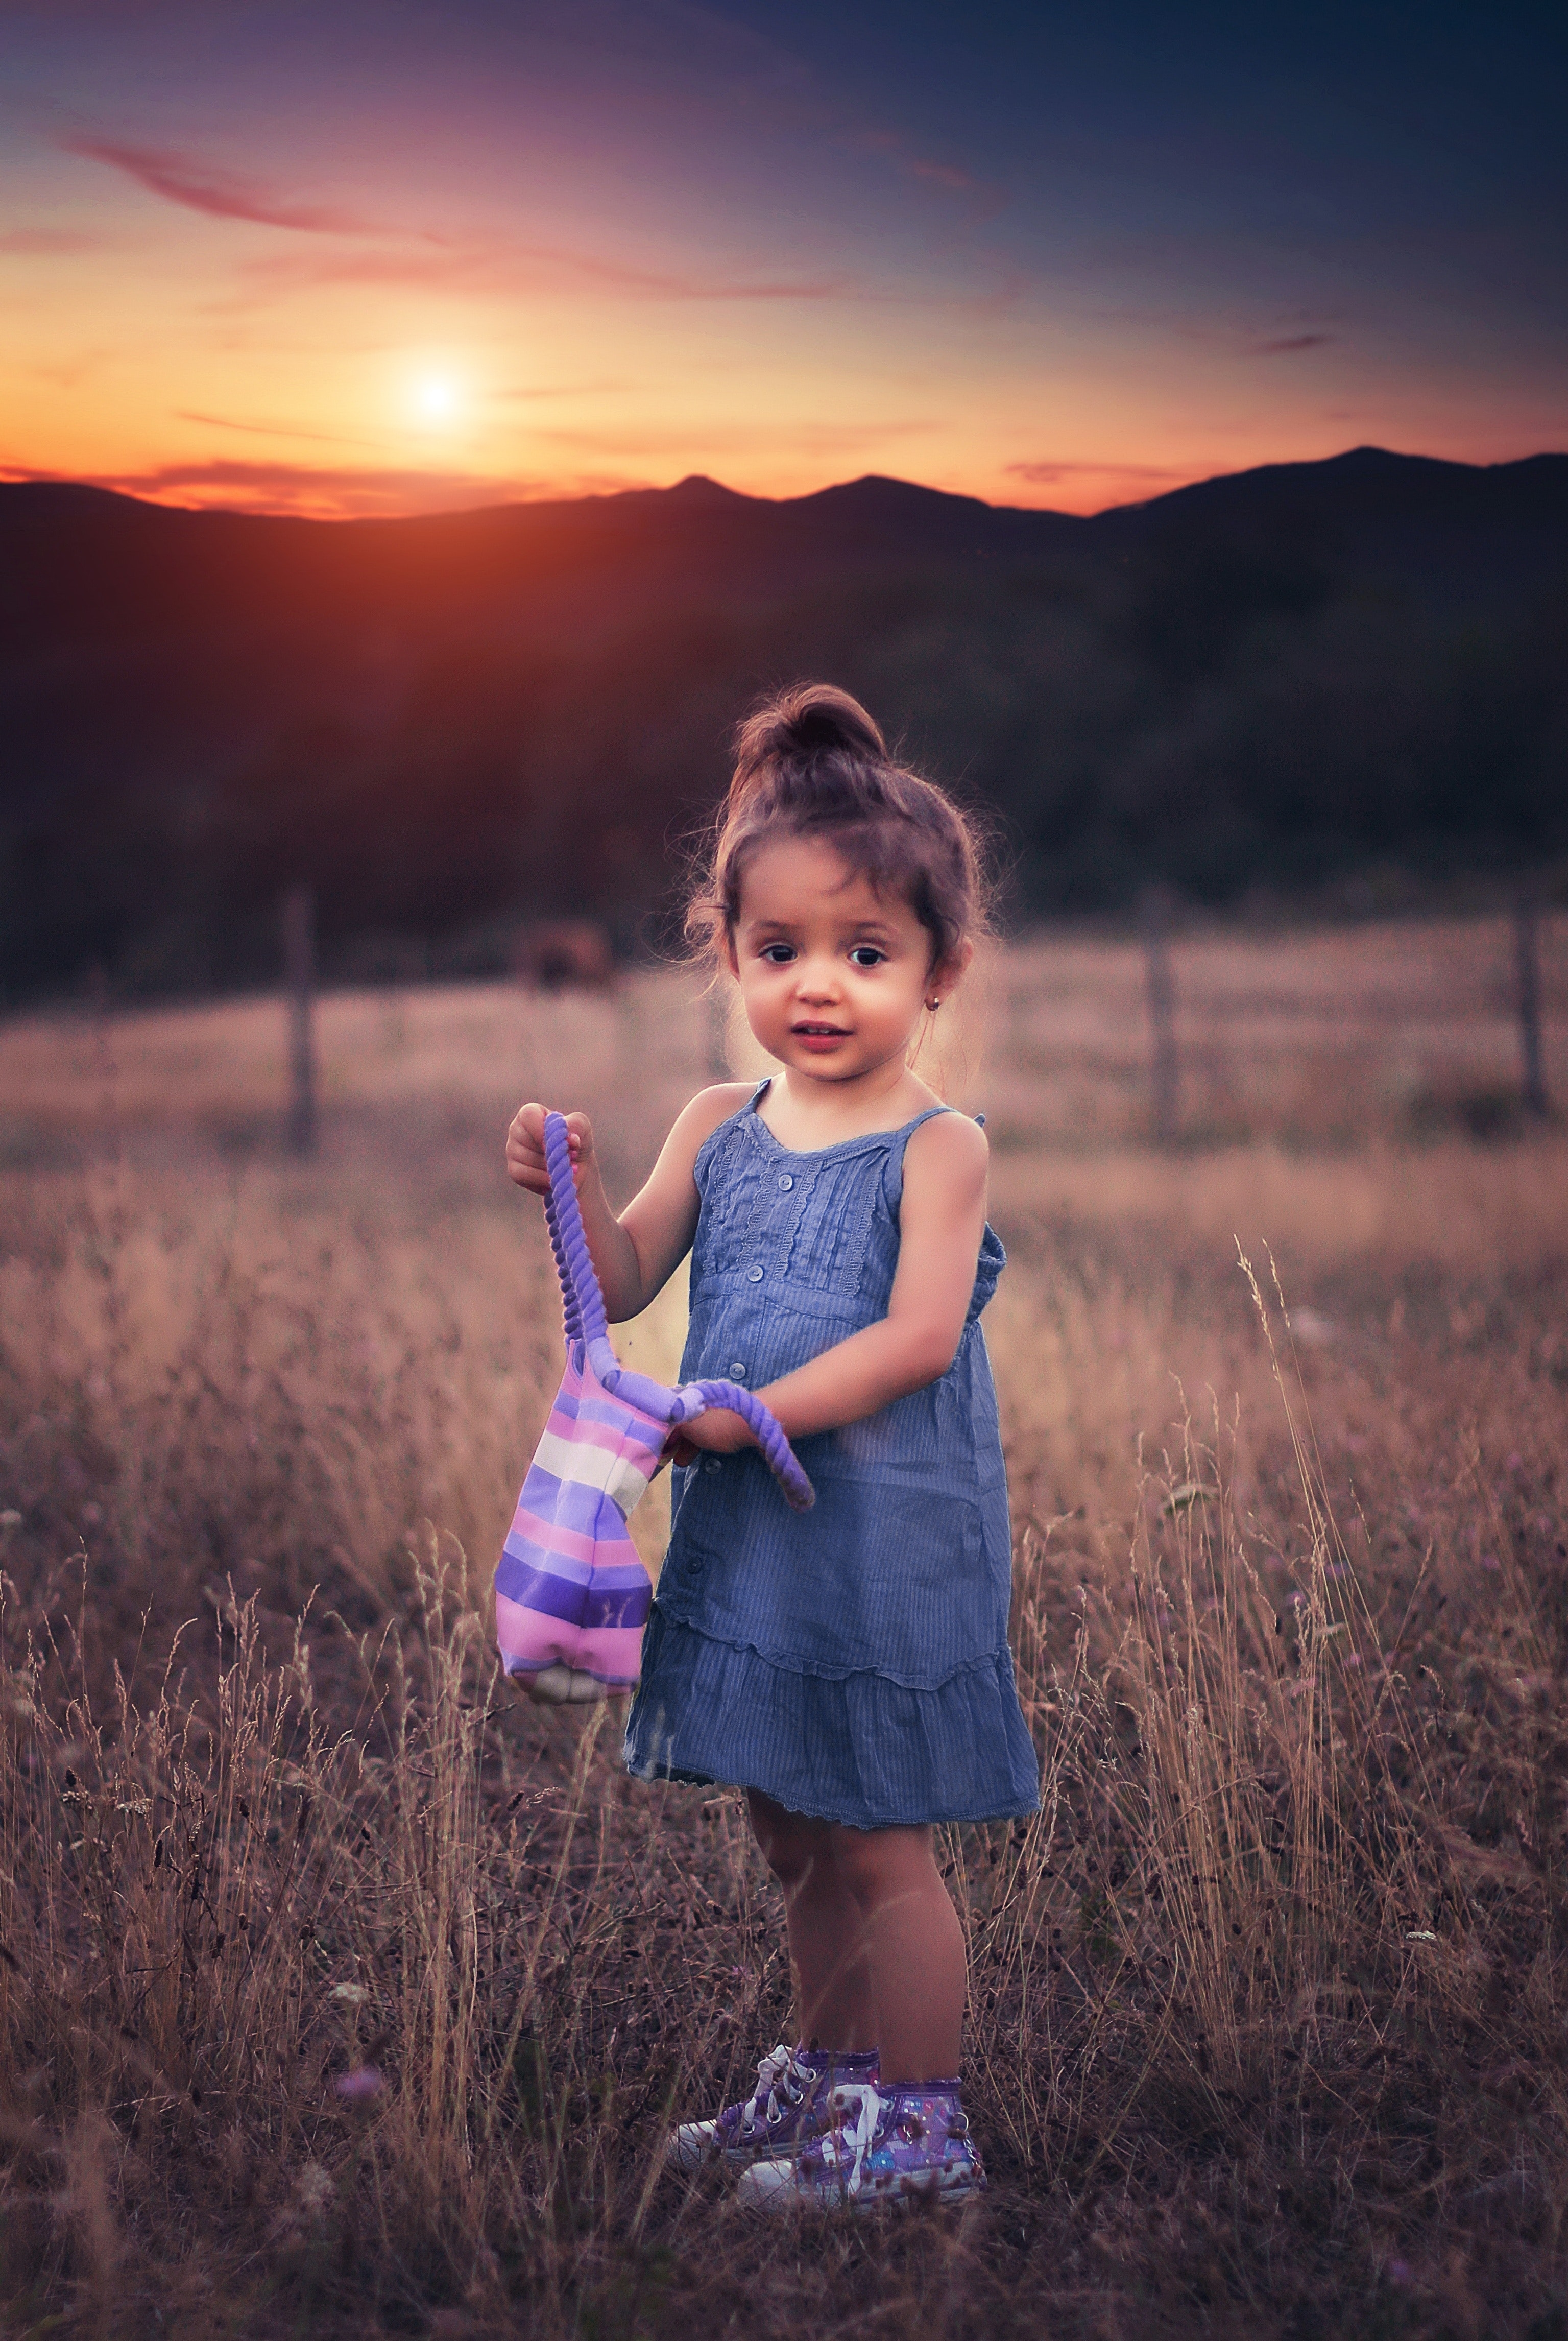 HD wallpaper, Sunset, Cute Kid, Adorable, Field, Cute Girl